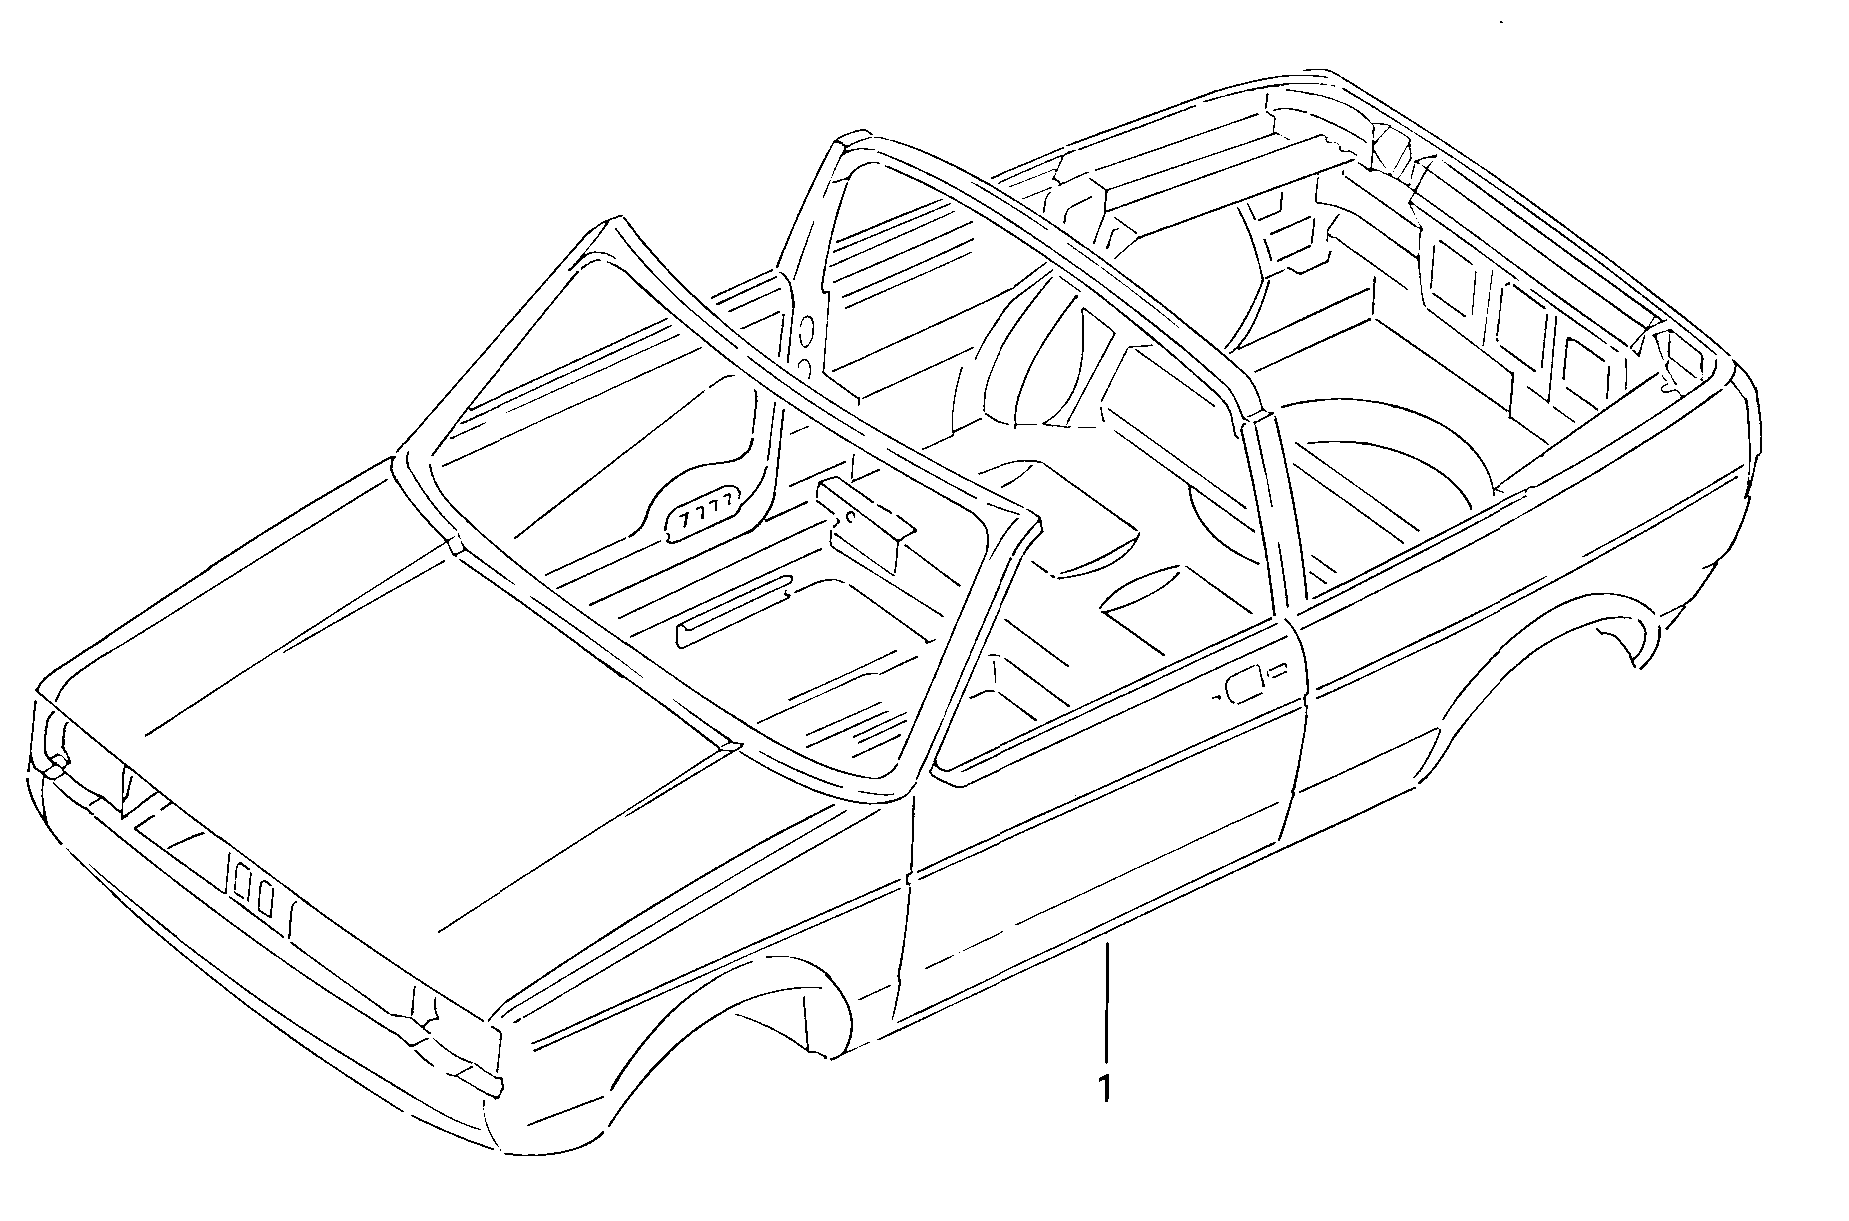 1217  - Golf Cabriolet - goc